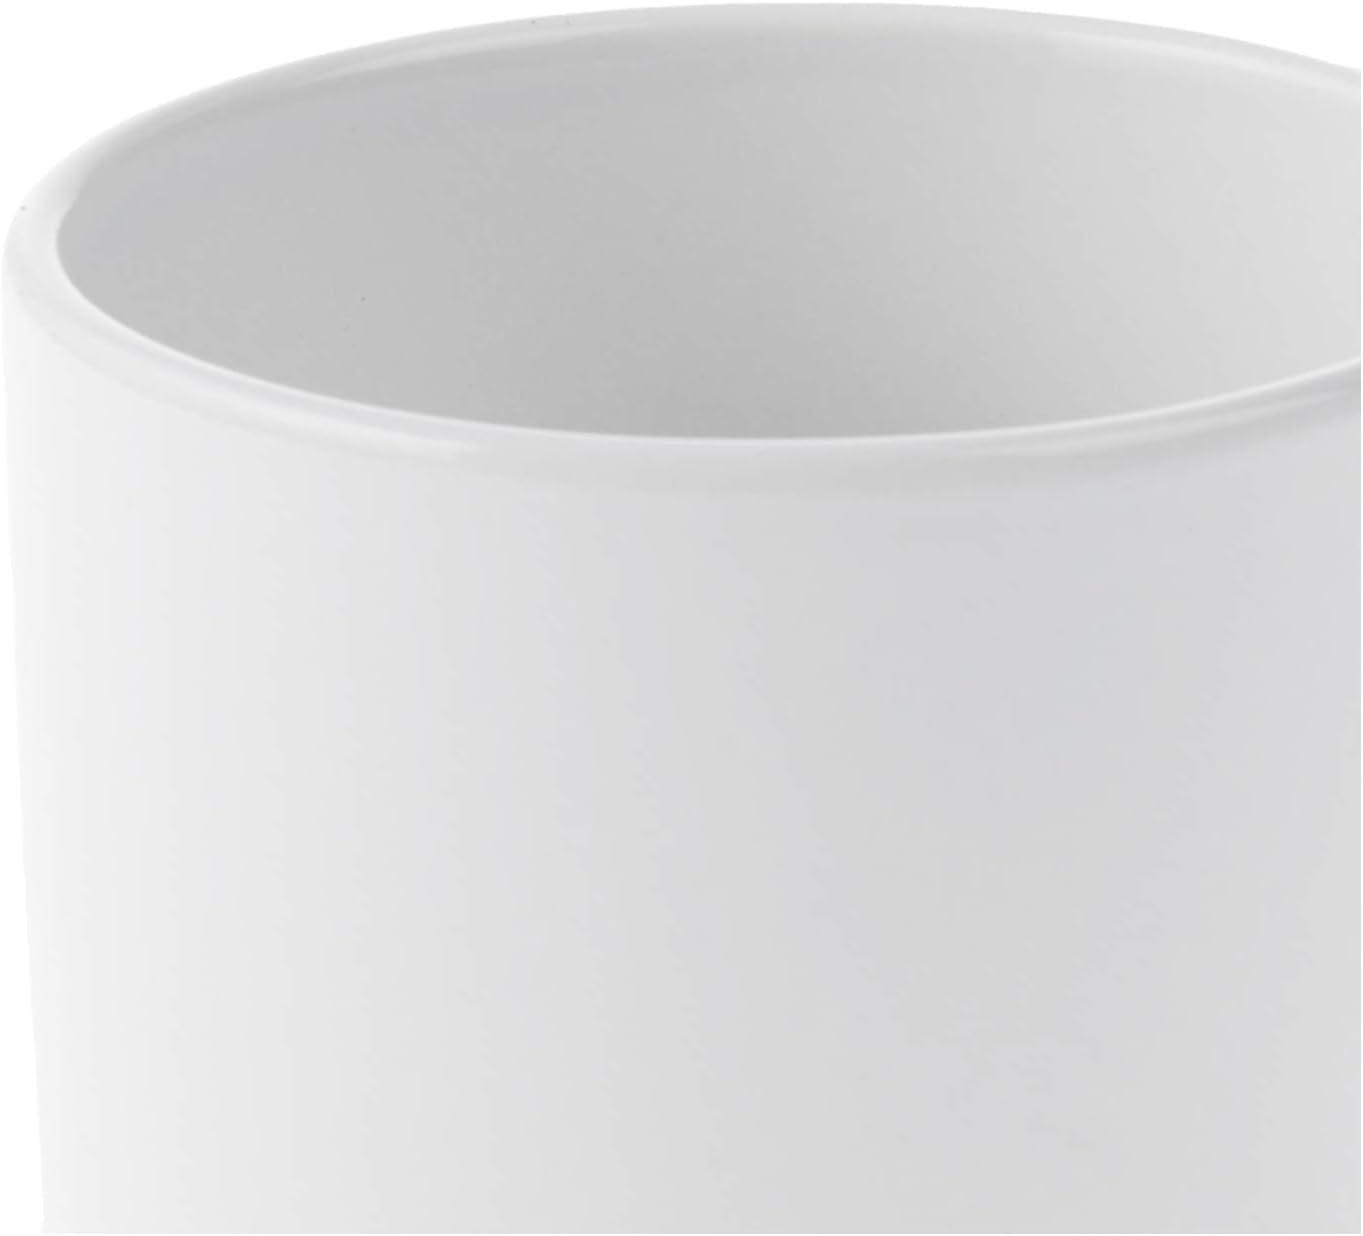  Cricut Beveled Blank Mug, Ceramic-Coated, Dishwasher &  Microwave Safe to Decorate, Mug Press & Infusible Ink Compatible,15 Oz  Sublimation Mug, Ideal for Crafts and Printing, 6 Count, White : Arts,  Crafts